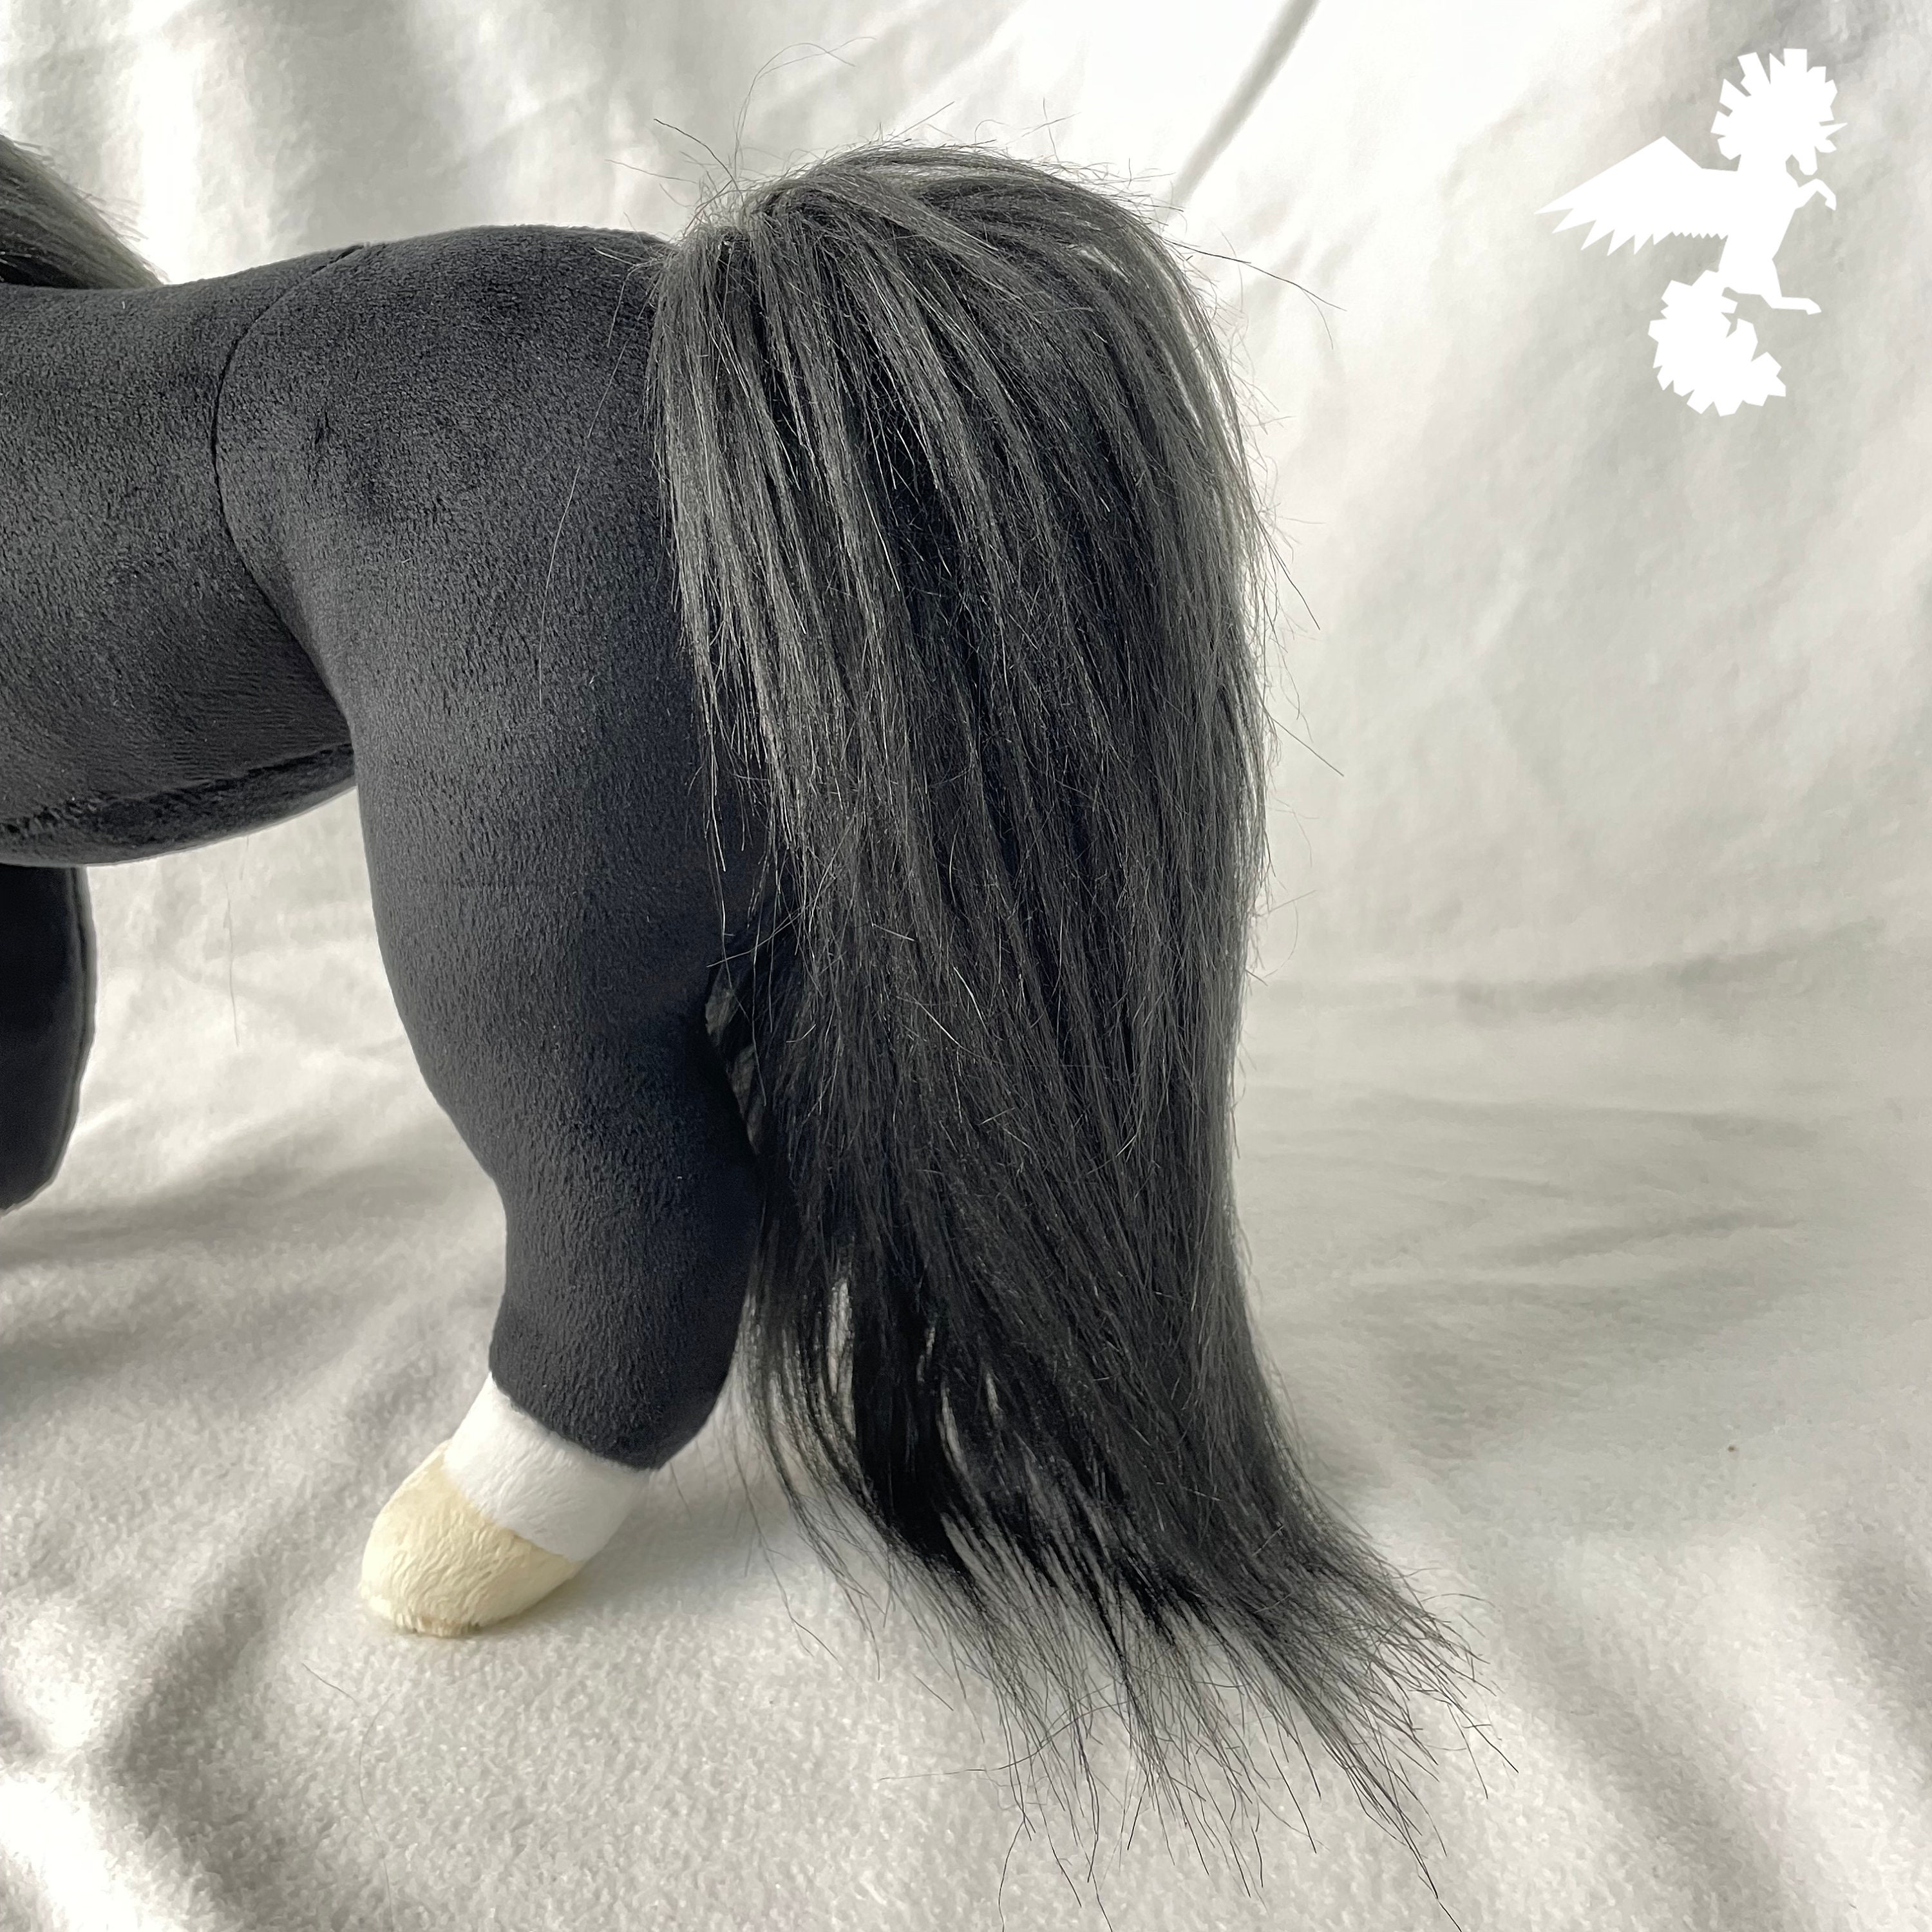 PLAYMOBIL - black horse left foot / horse / 3250 3287 3319 4437 4866